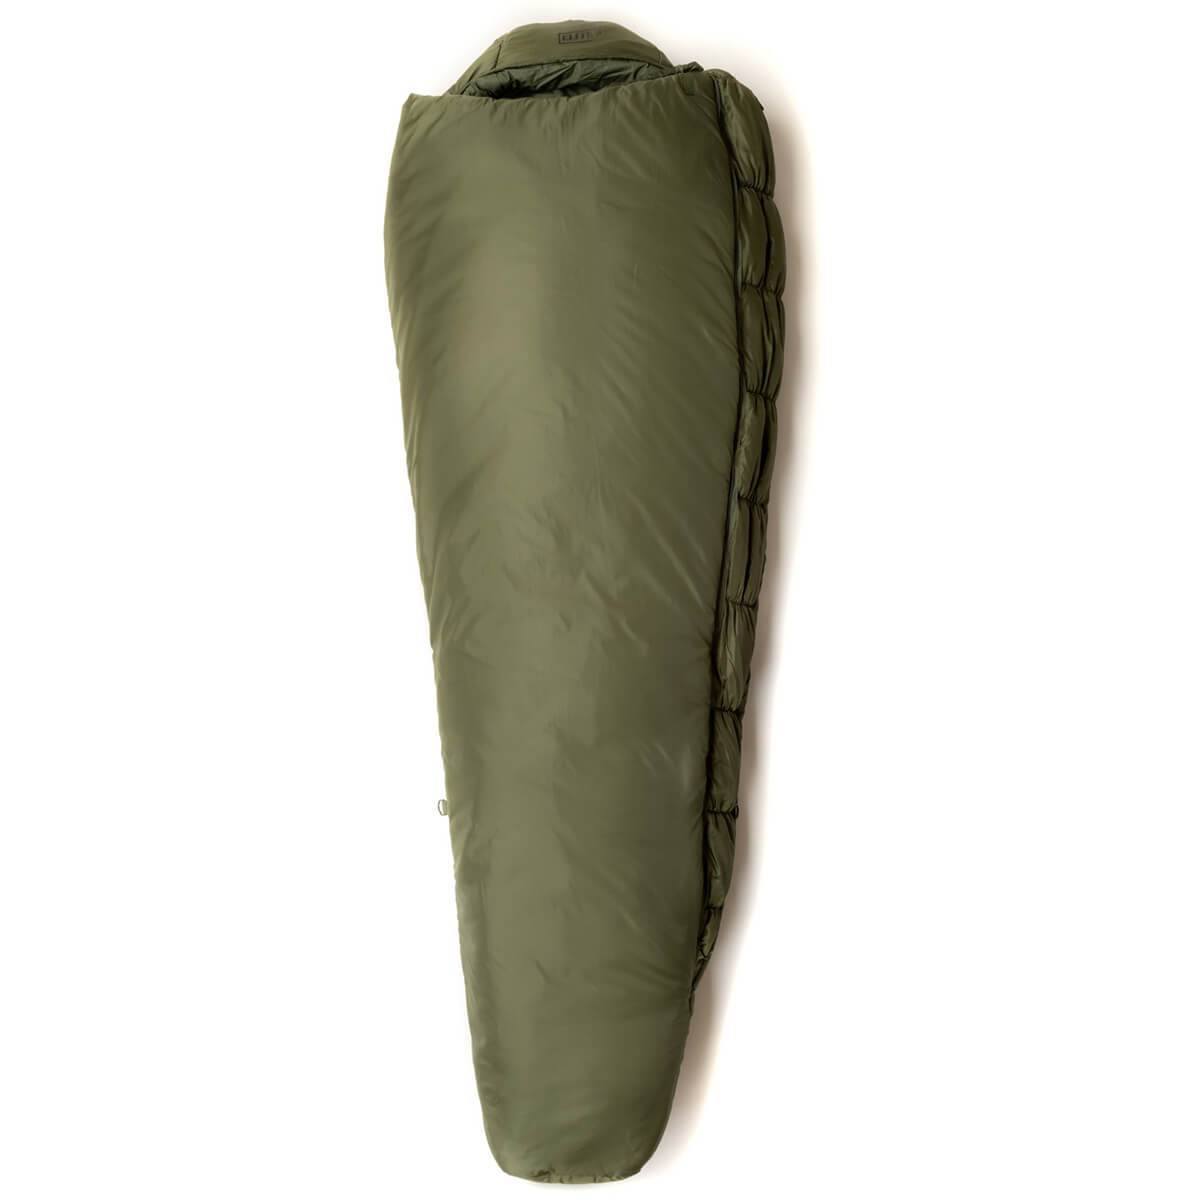 Snugpak Softie Elite 5 Sleeping Bag Olive Green - John Bull Clothing